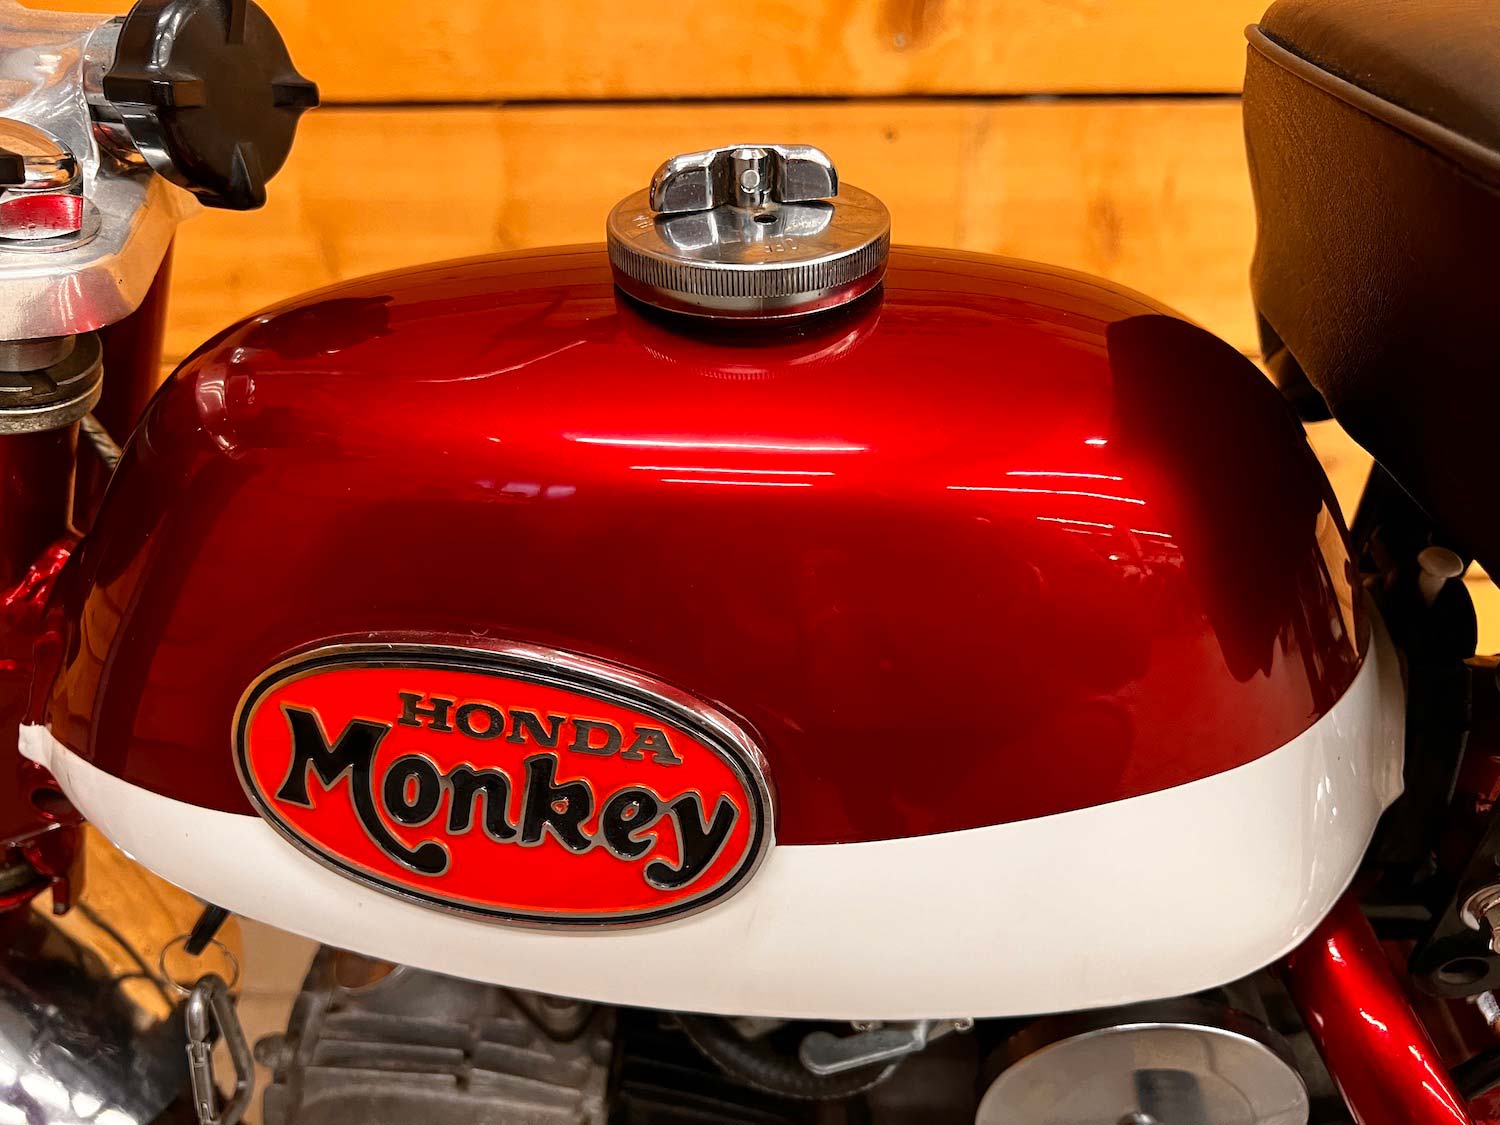 Honda_Monkey_Z50_Cezanne_classic_motorcycle_1-163.jpg